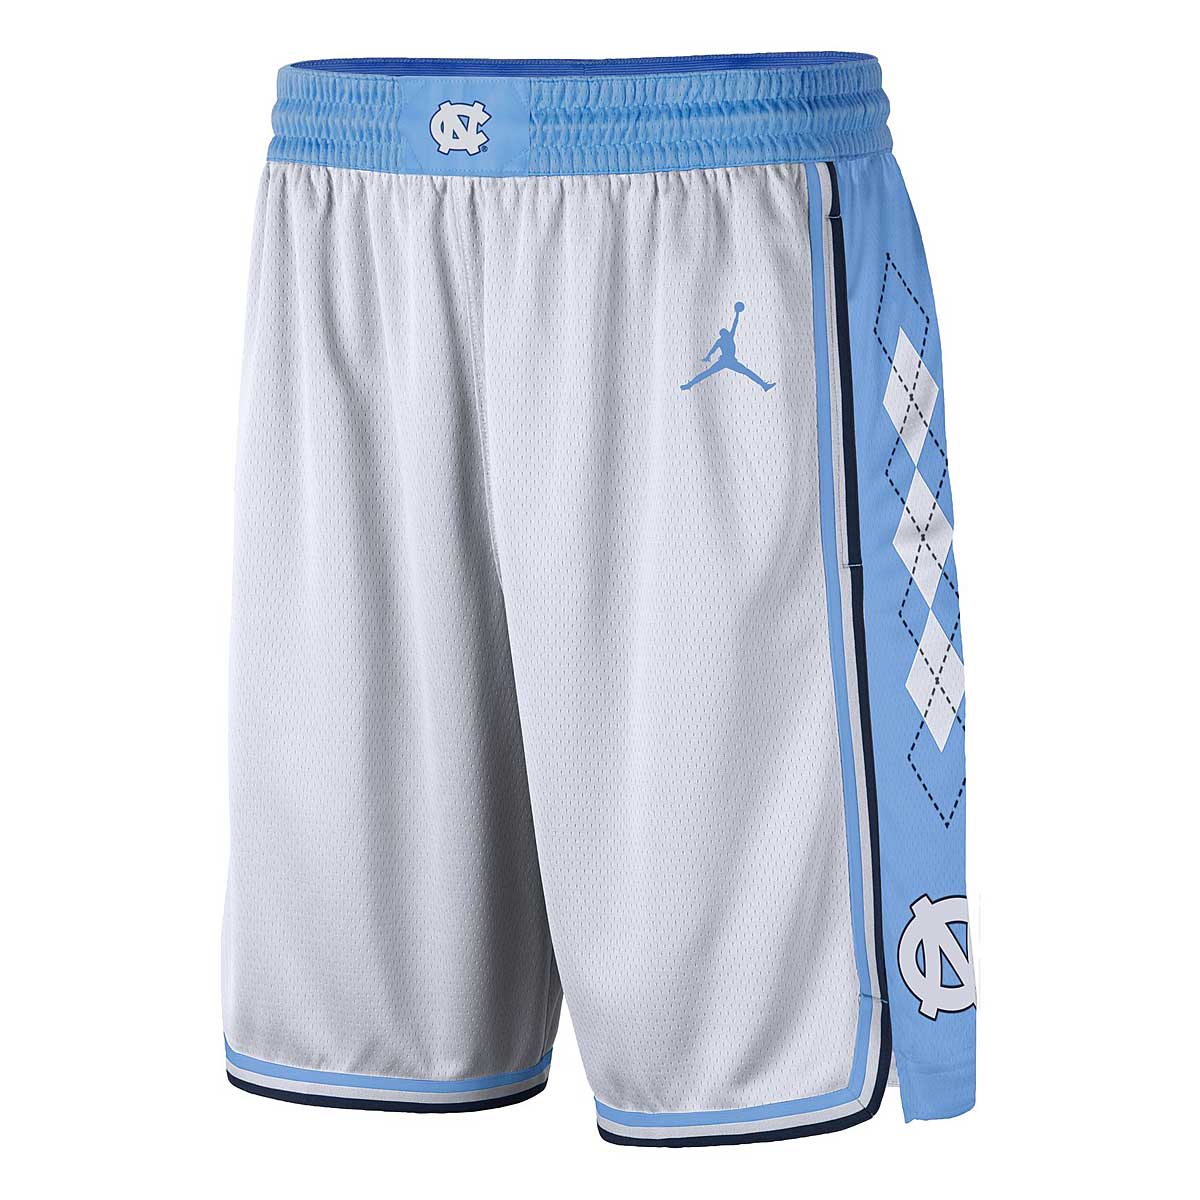 Jordan Ncaa North Carolina Tarheels Limited Edition Home Shorts, Weiß/valor Blau S